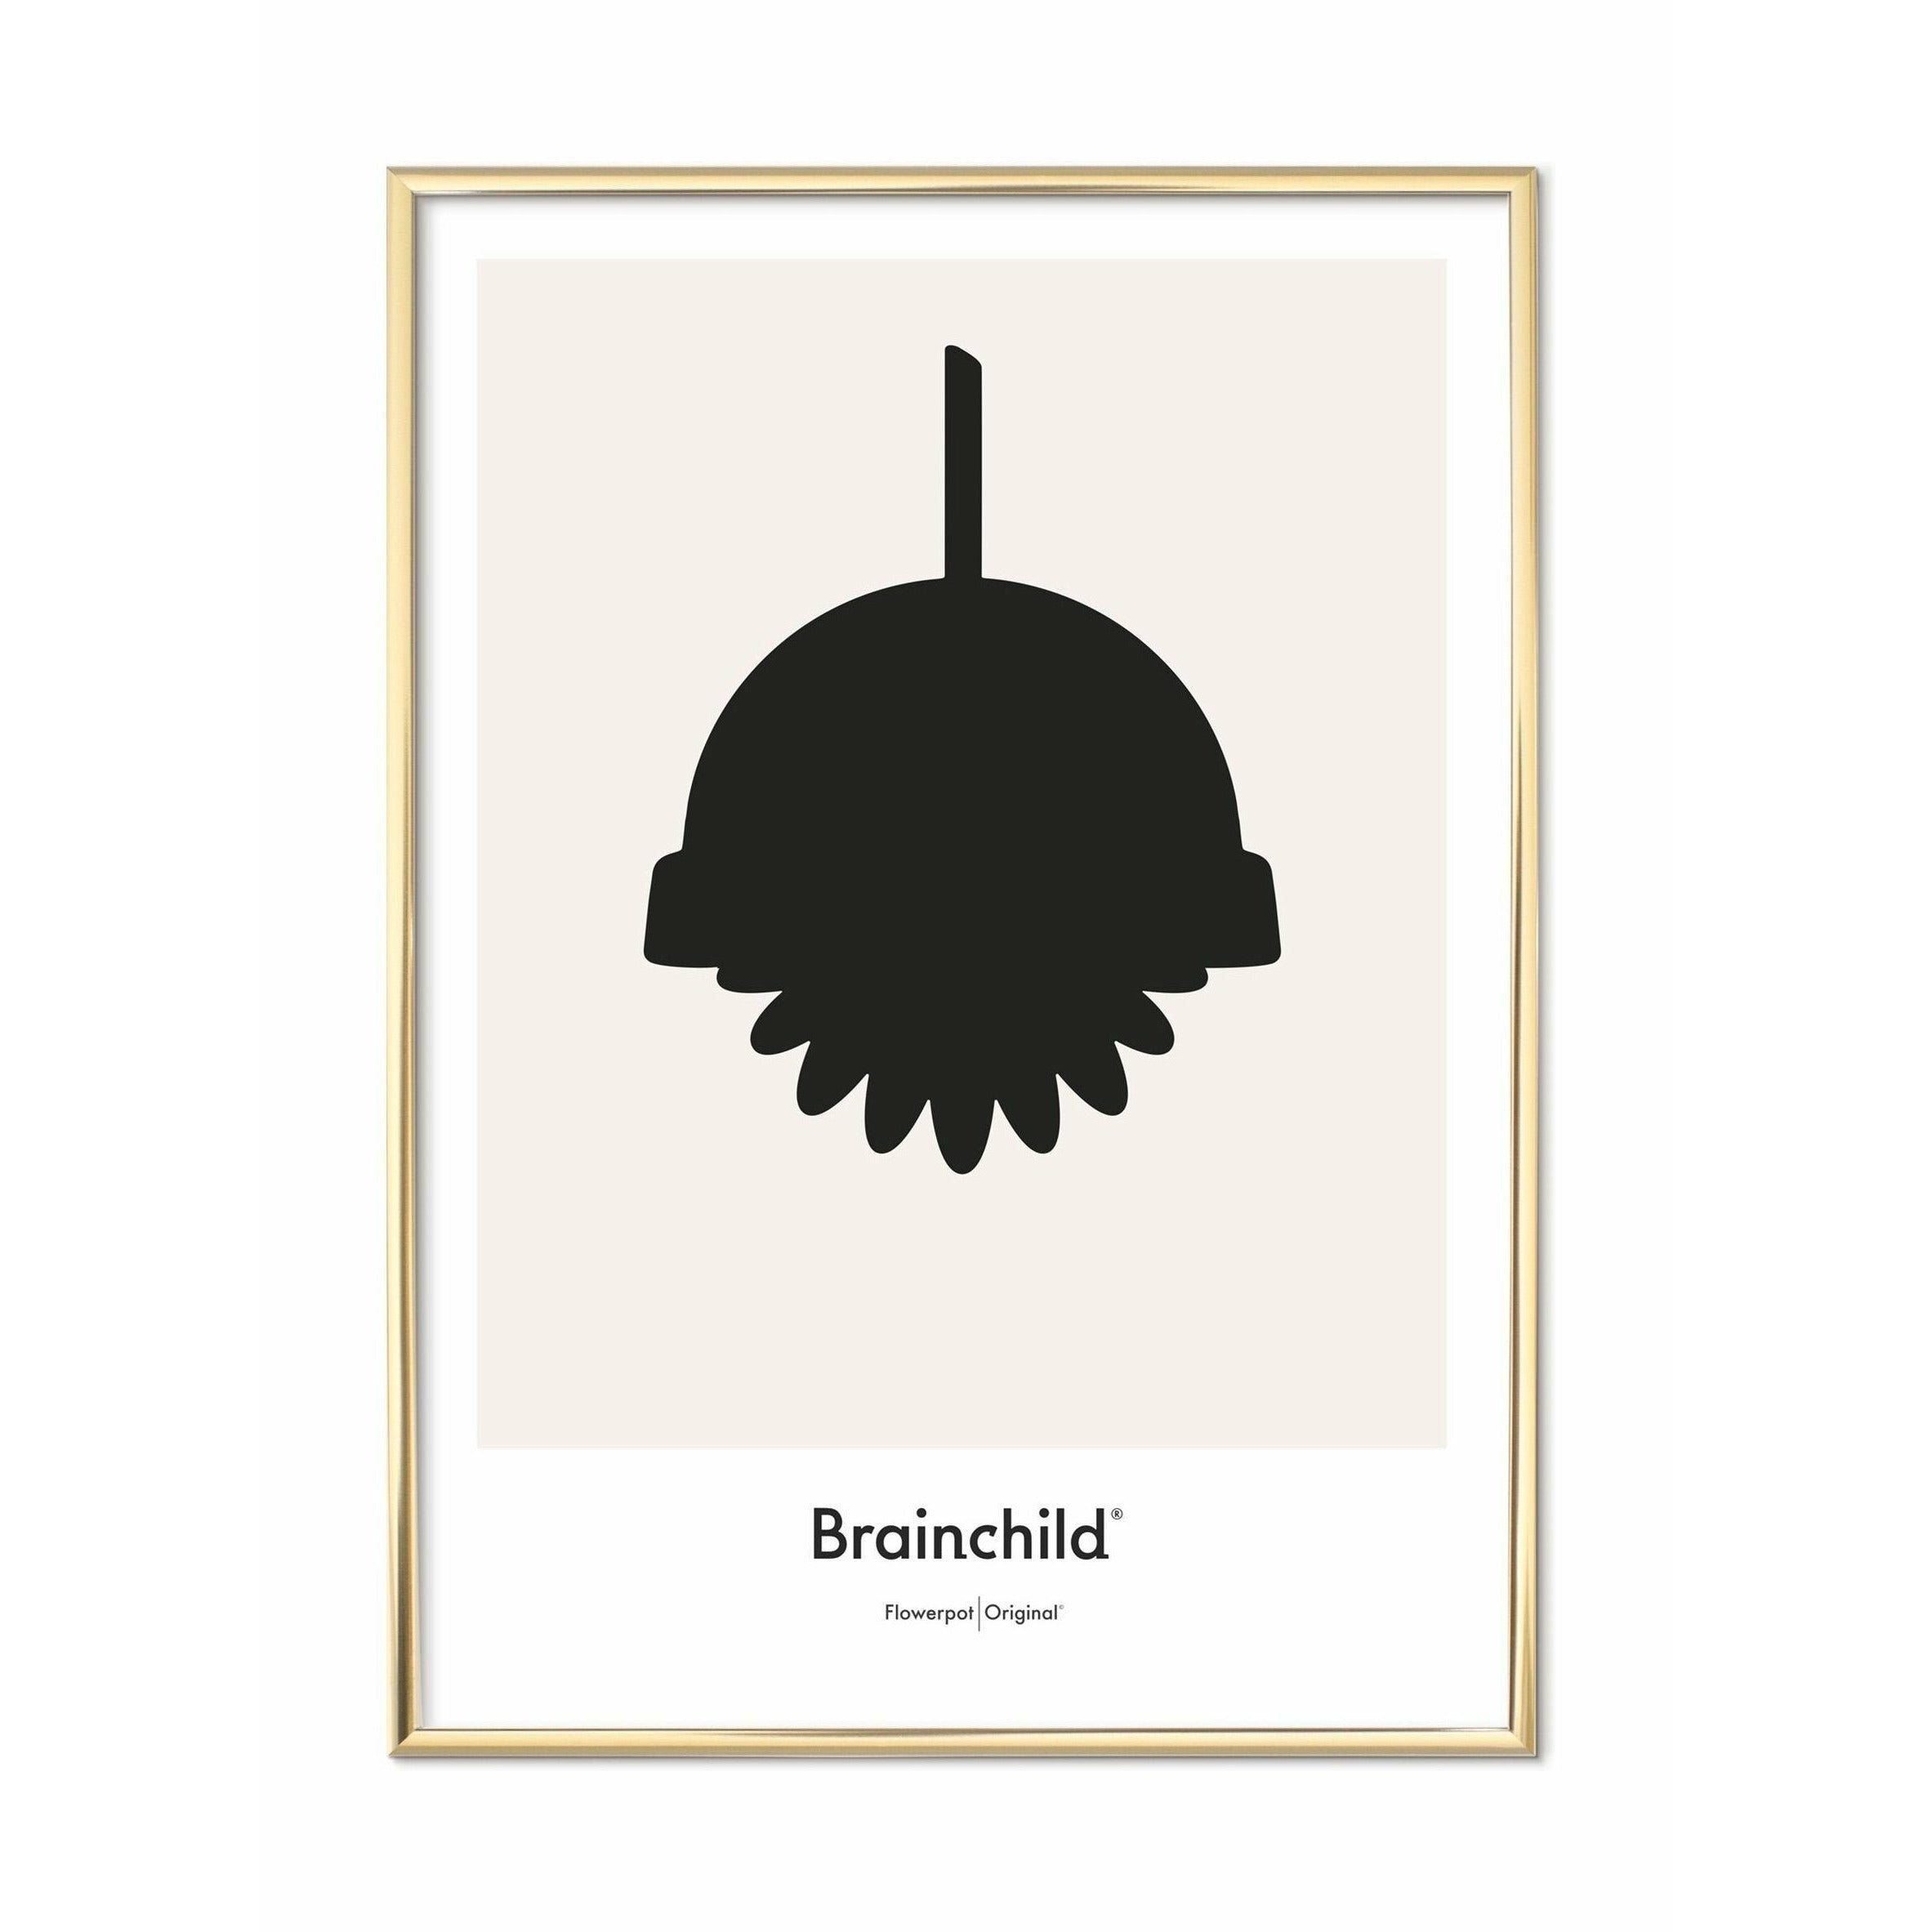 Brainchild Flowerpot ontwerppictogram Poster, messing gekleurd frame 50 x70 cm, grijs